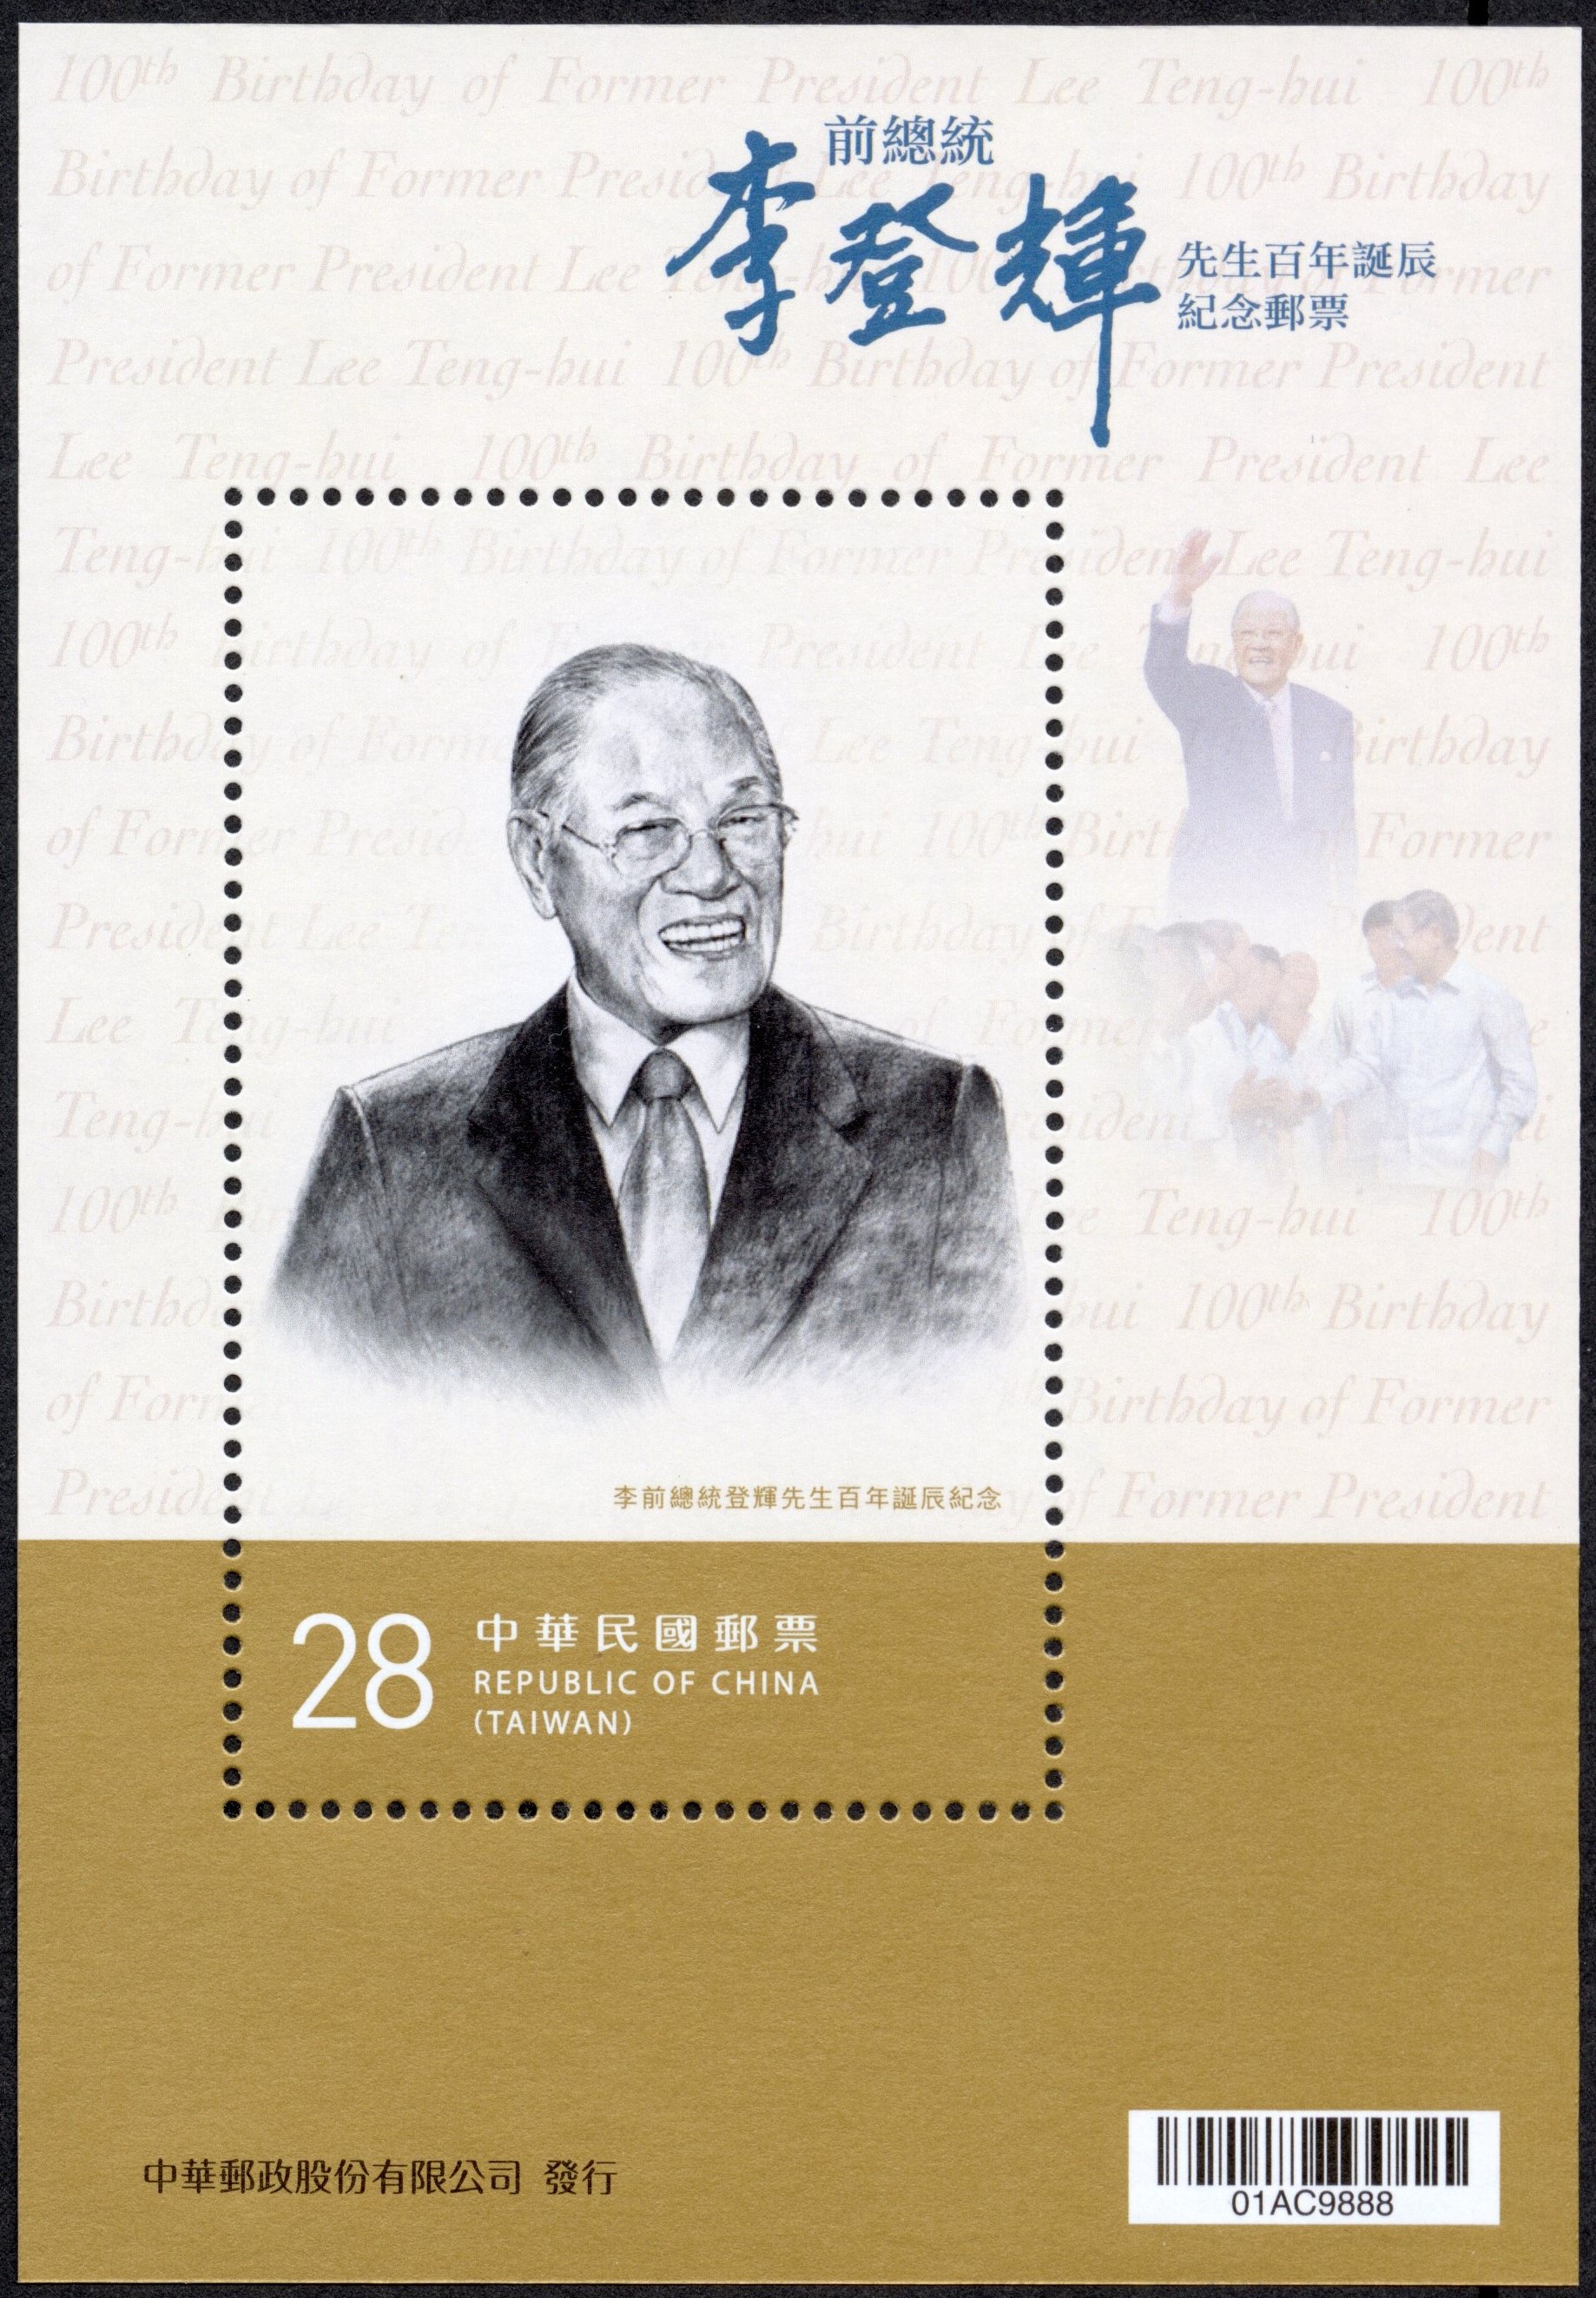 100th Birthday of Former President Lee Teng-hui Commemorative Souvenir Sheet